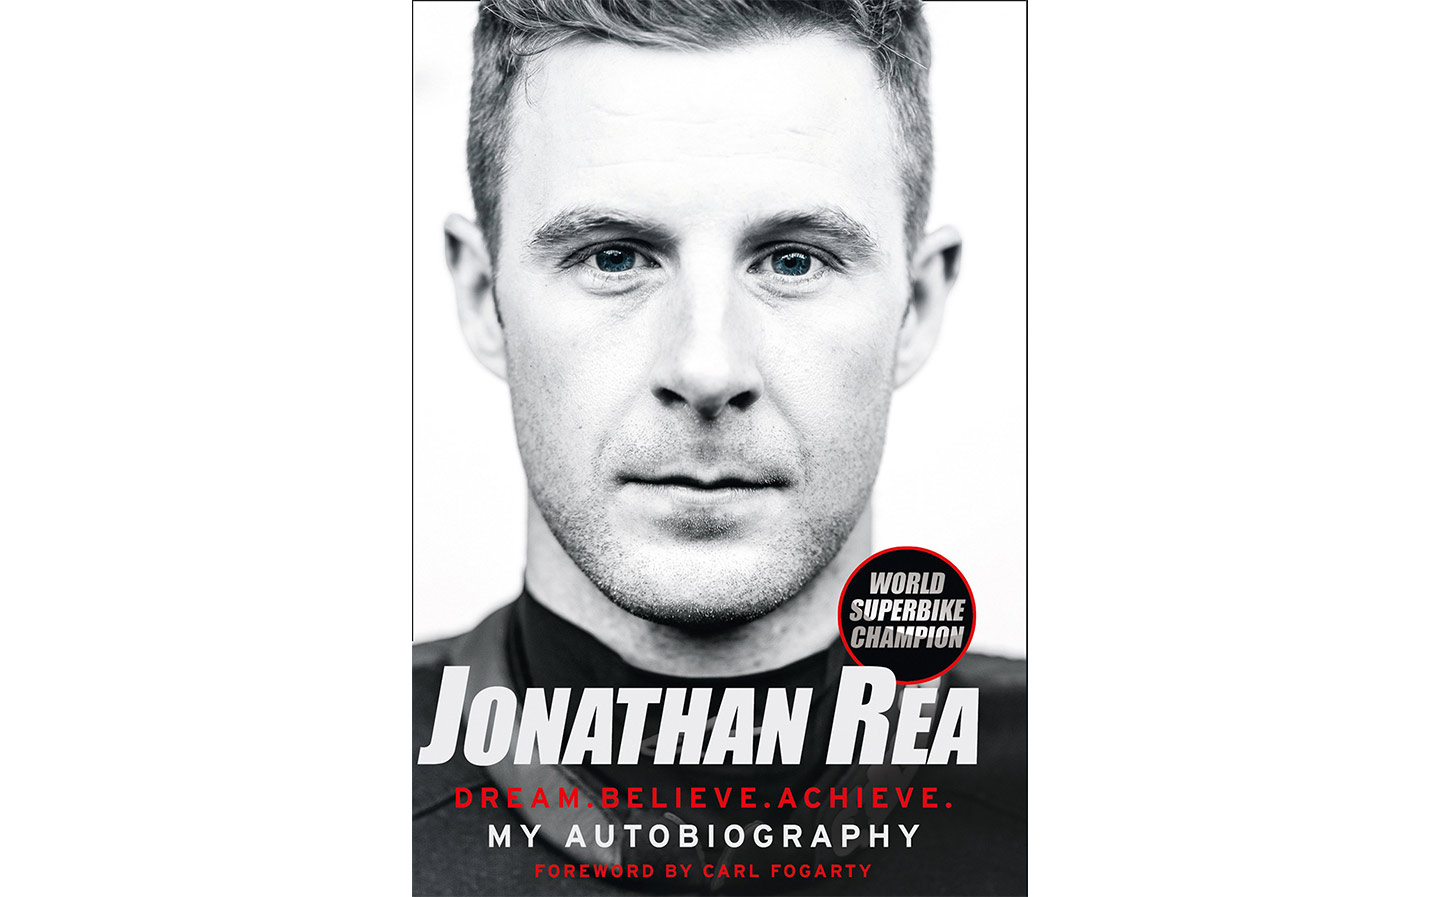 Christmas gift ideas for car fan: Jonathan Rea Dream Believe Achieve autobiography